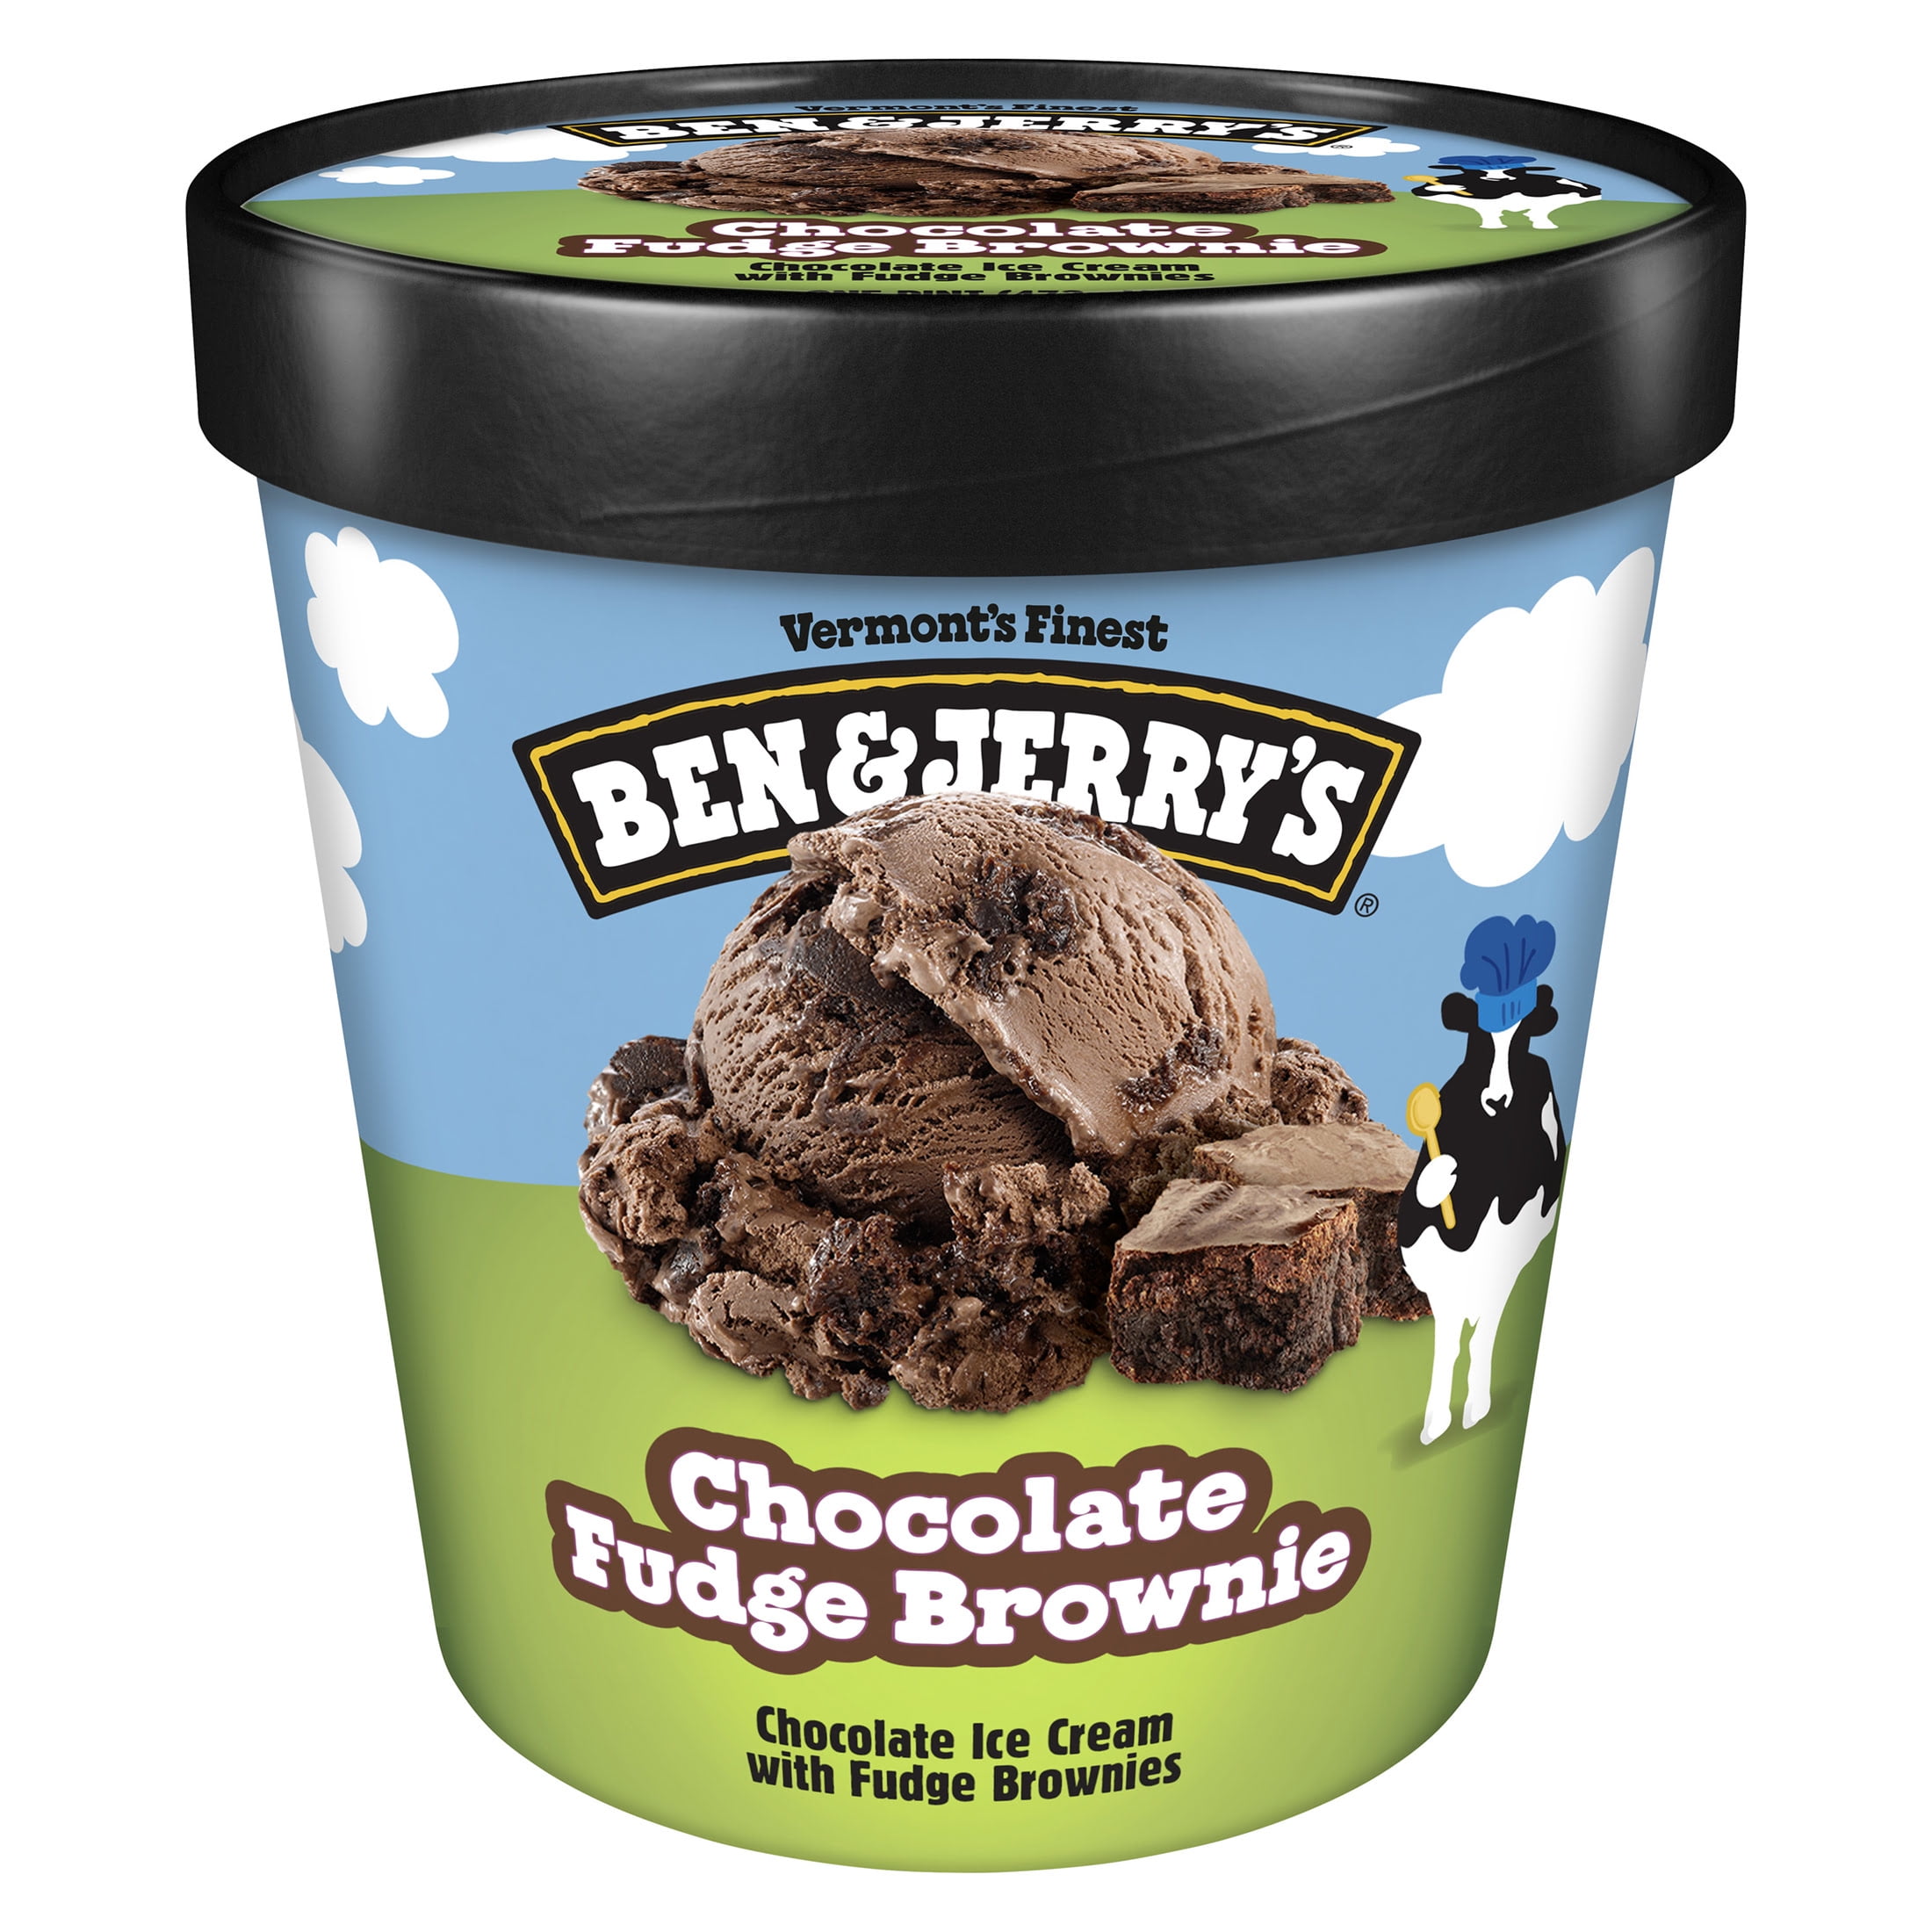 Ben & Jerry's Chocolate Fudge Brownie Chocolate Ice Cream Pint 16 oz